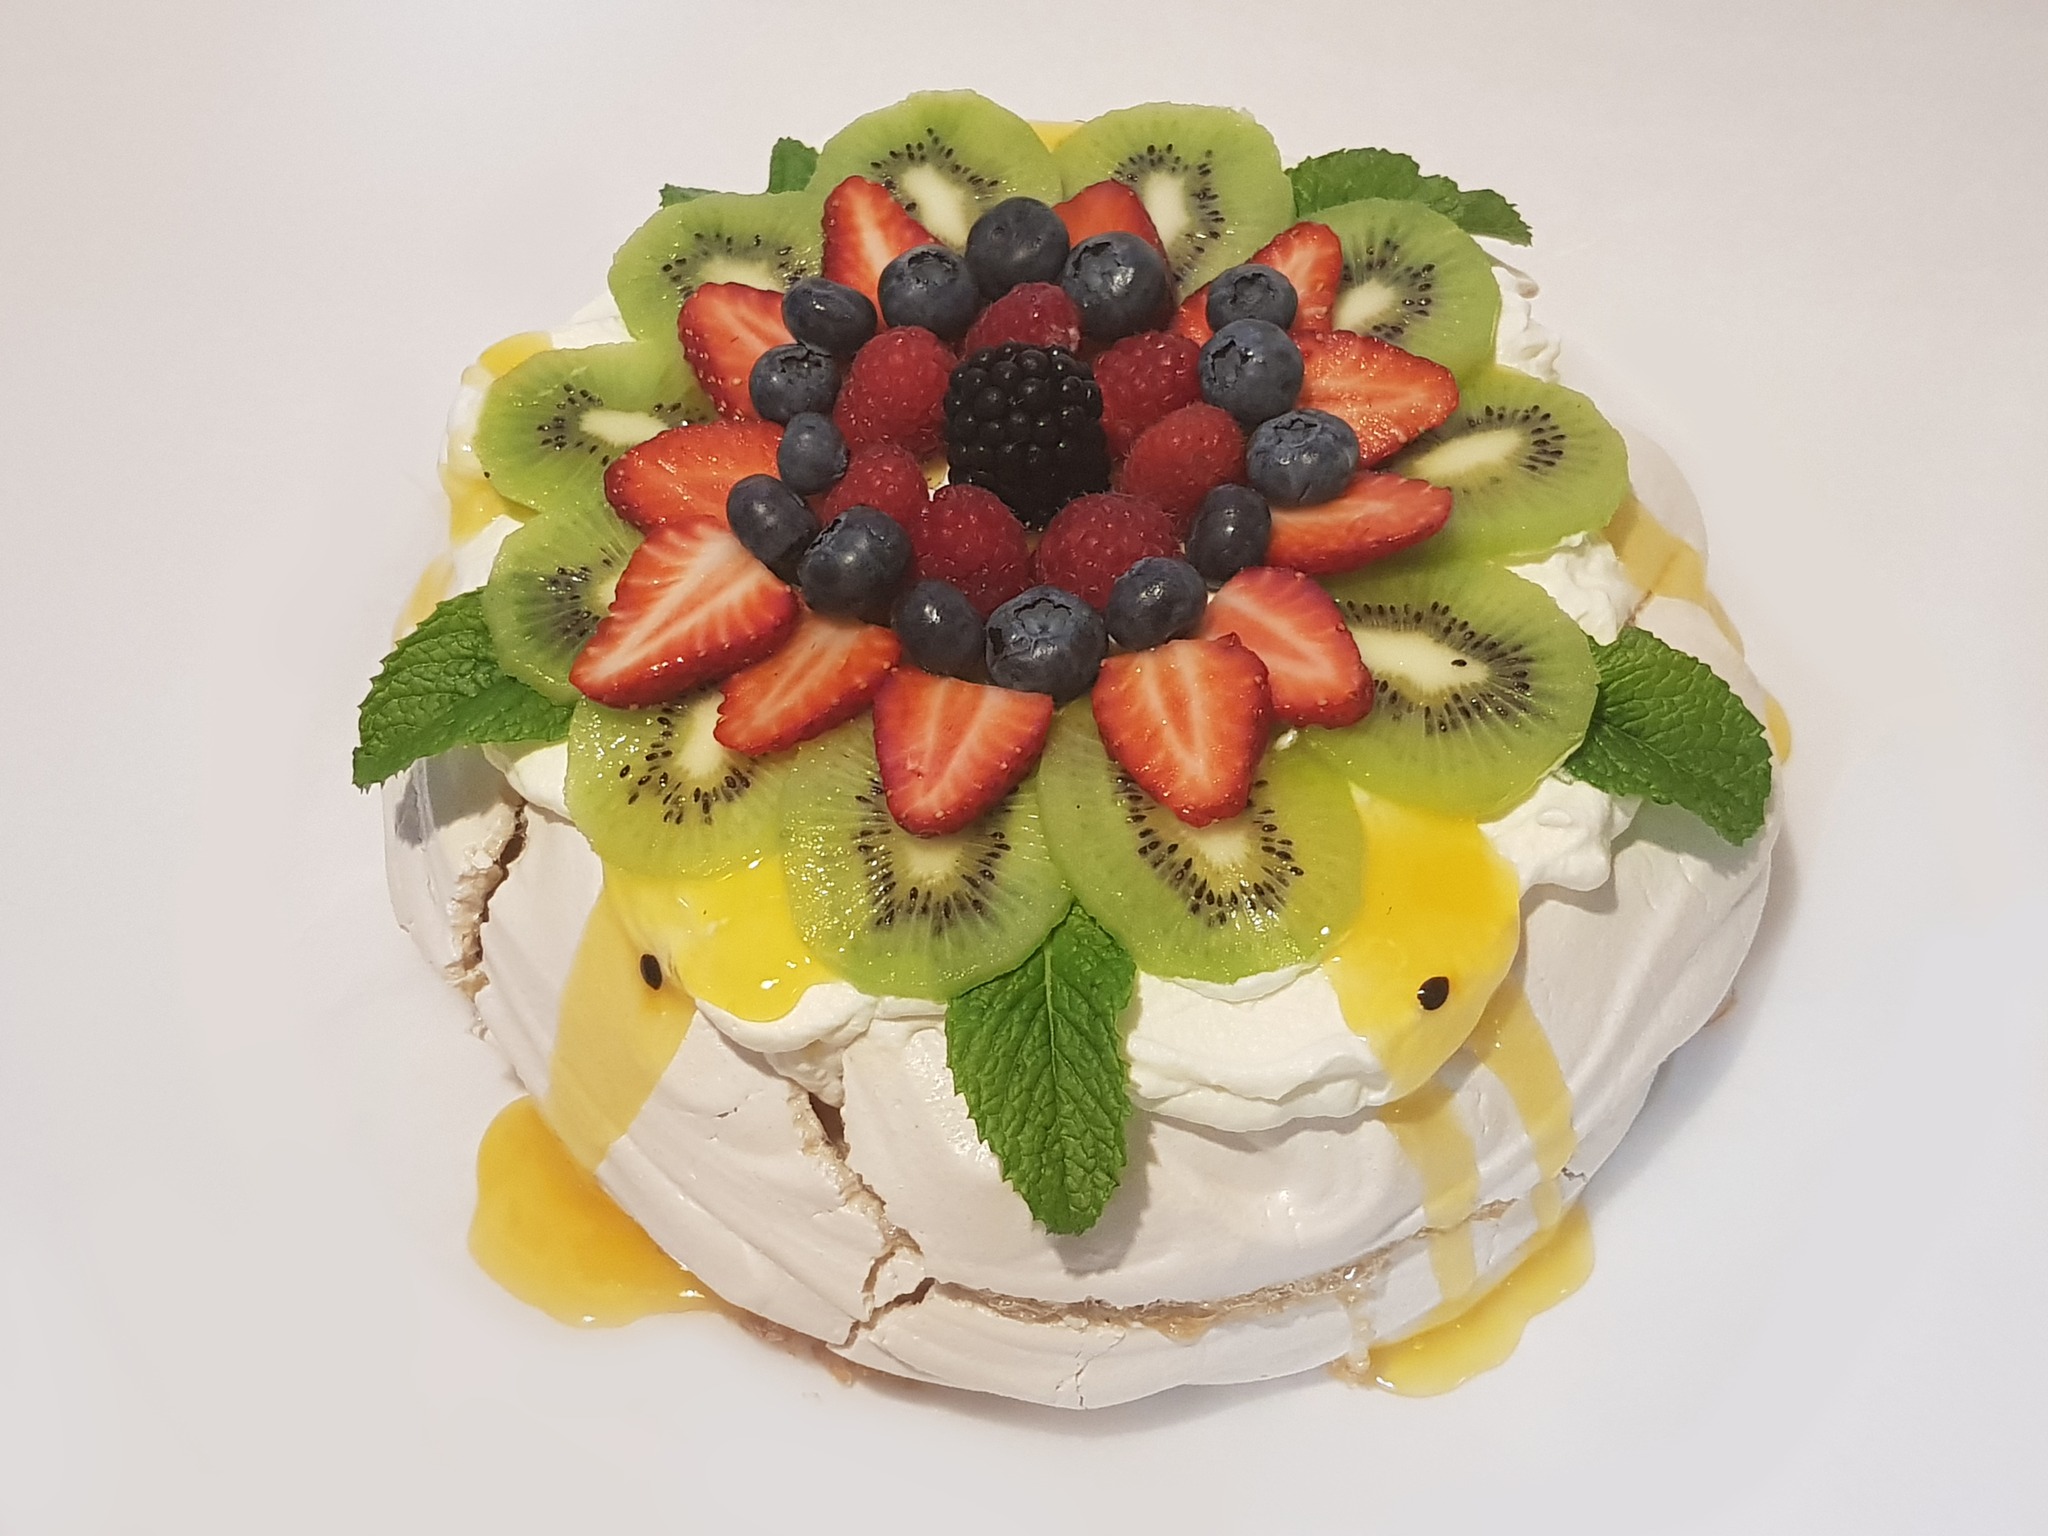 Pavlova Wikipedia - (dessert)